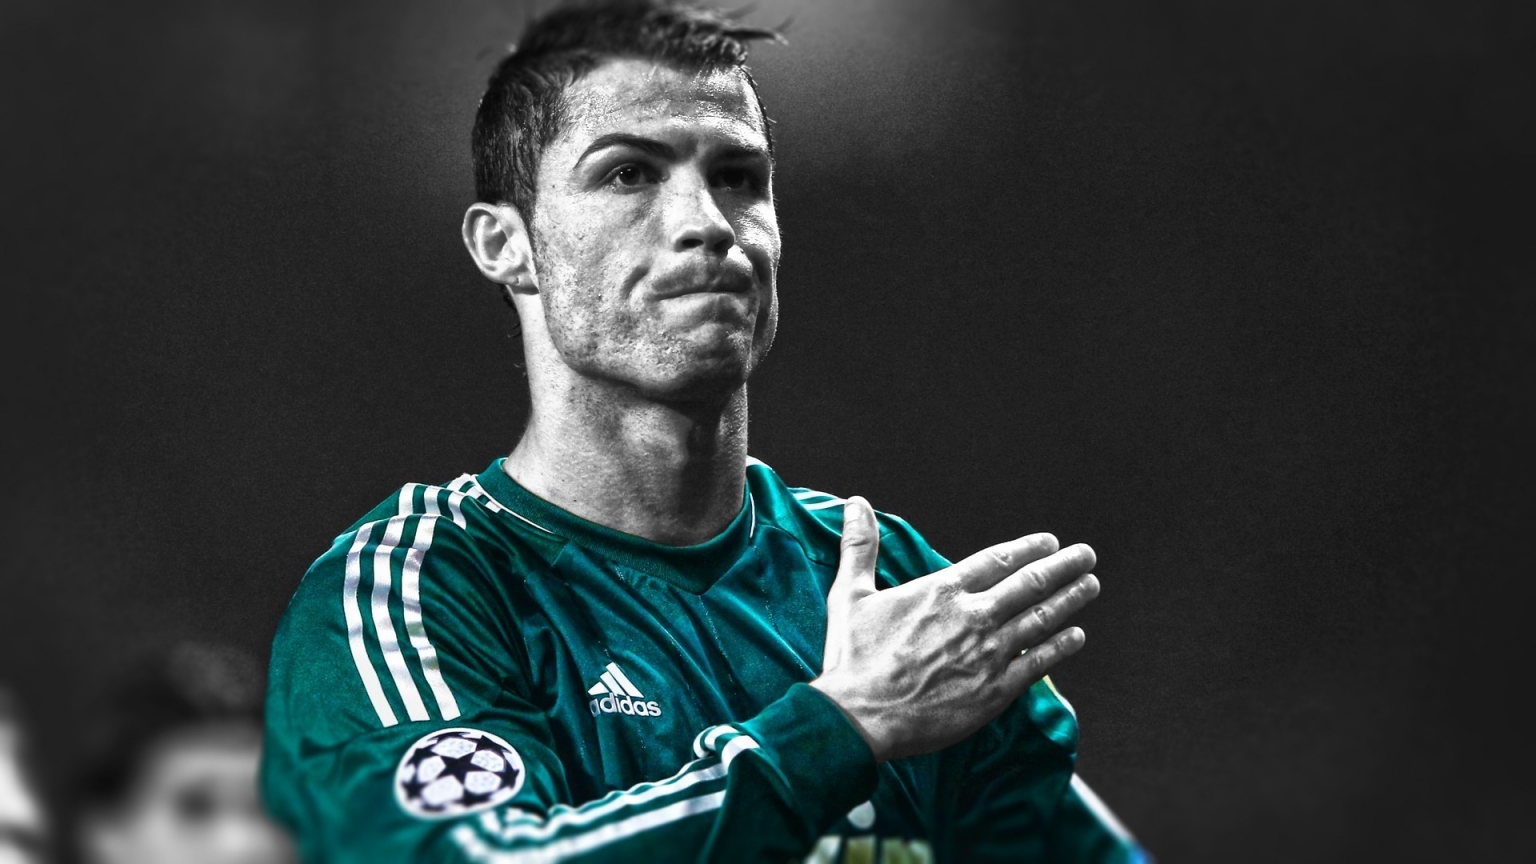 Cristiano Ronaldo Monochrome for 1536 x 864 HDTV resolution